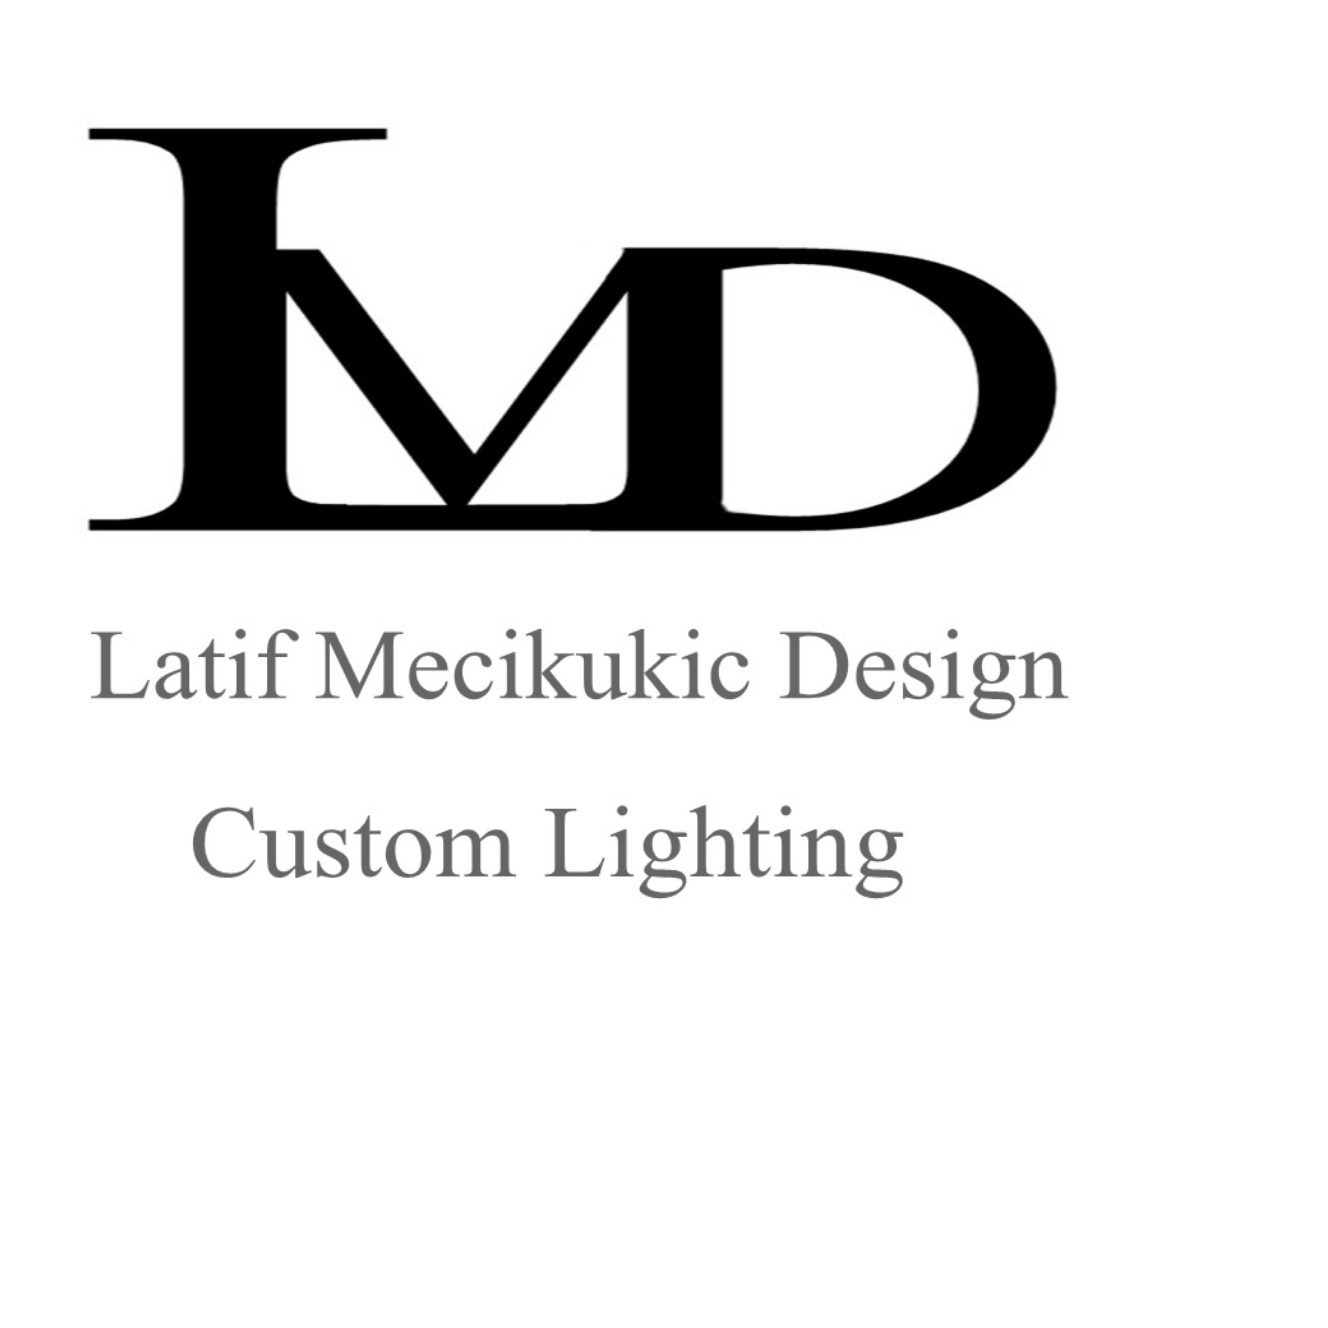 Latif Mecikukic Design